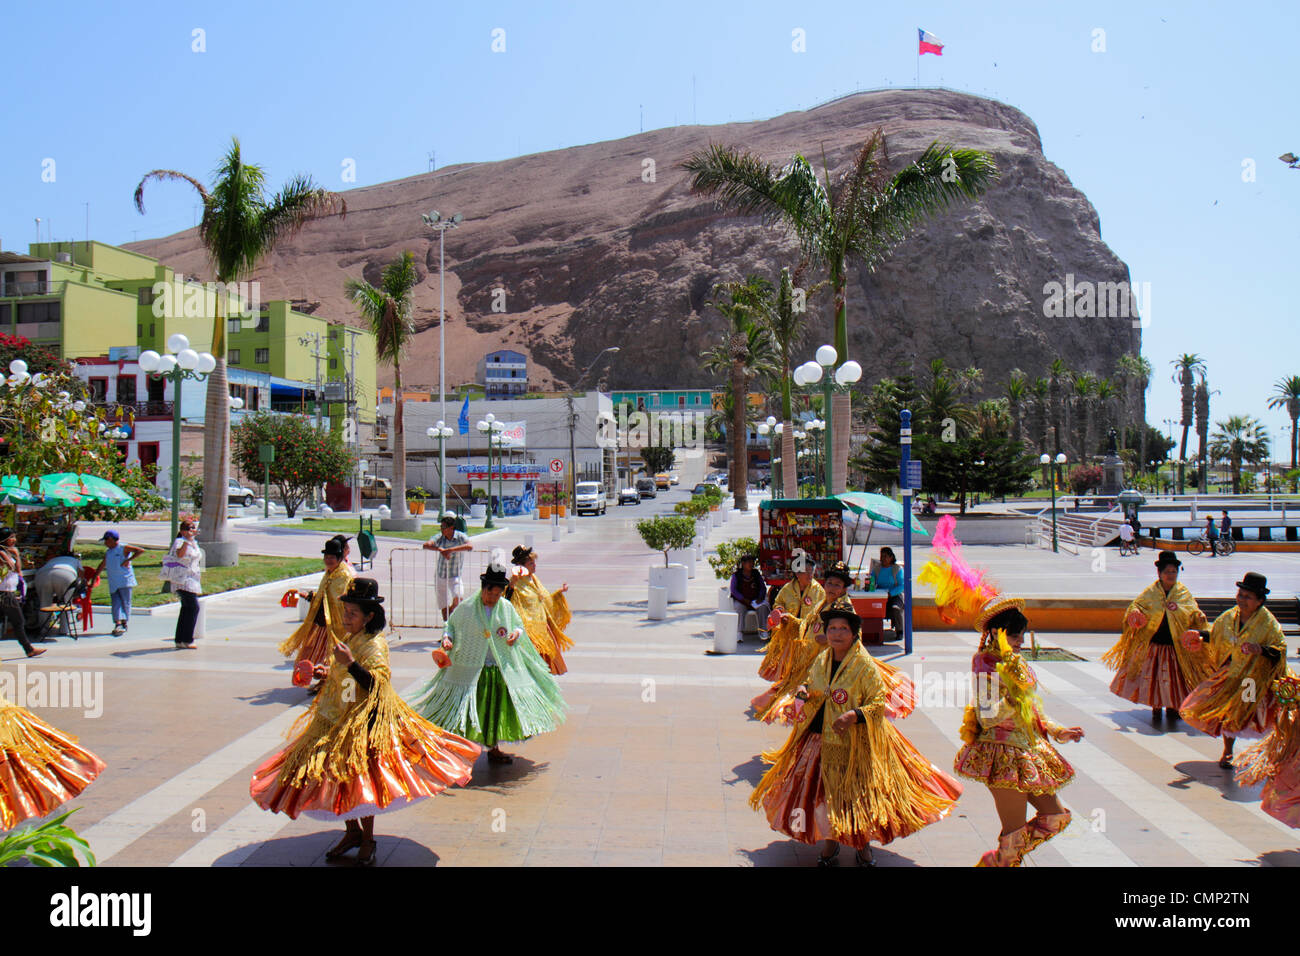 Arica Chile,Plaza Colon,El Morro de Arica,rock,Carnaval Andino,Andean Carnival,parade,indigenous,Aymara heritage,folklore traditional dance,troupe,His Stock Photo